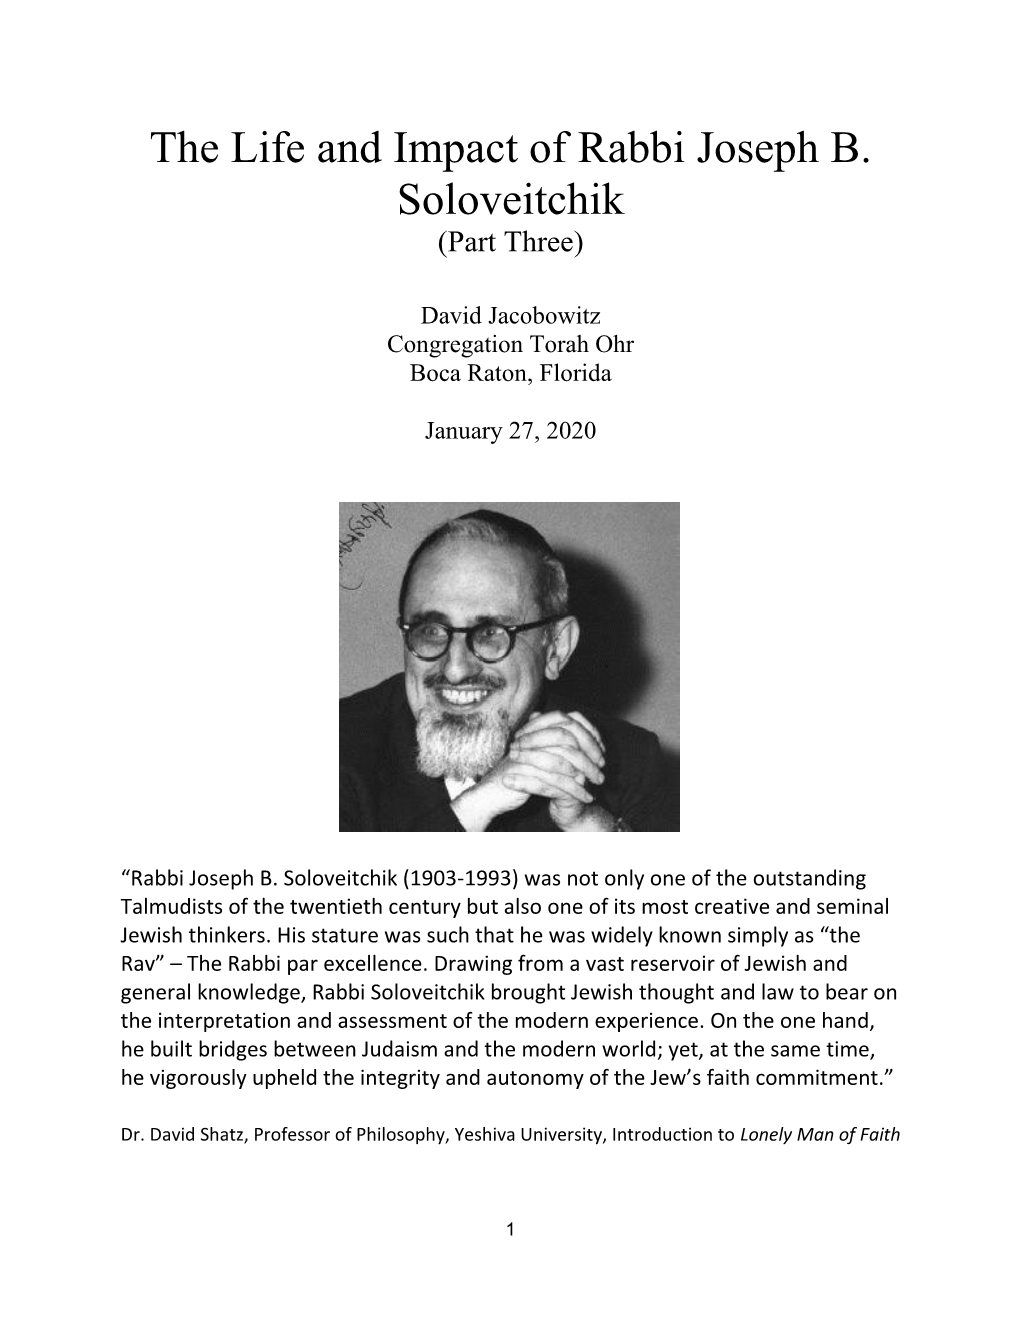 The Life and Impact of Rabbi Joseph B. Soloveitchik (Part Three)